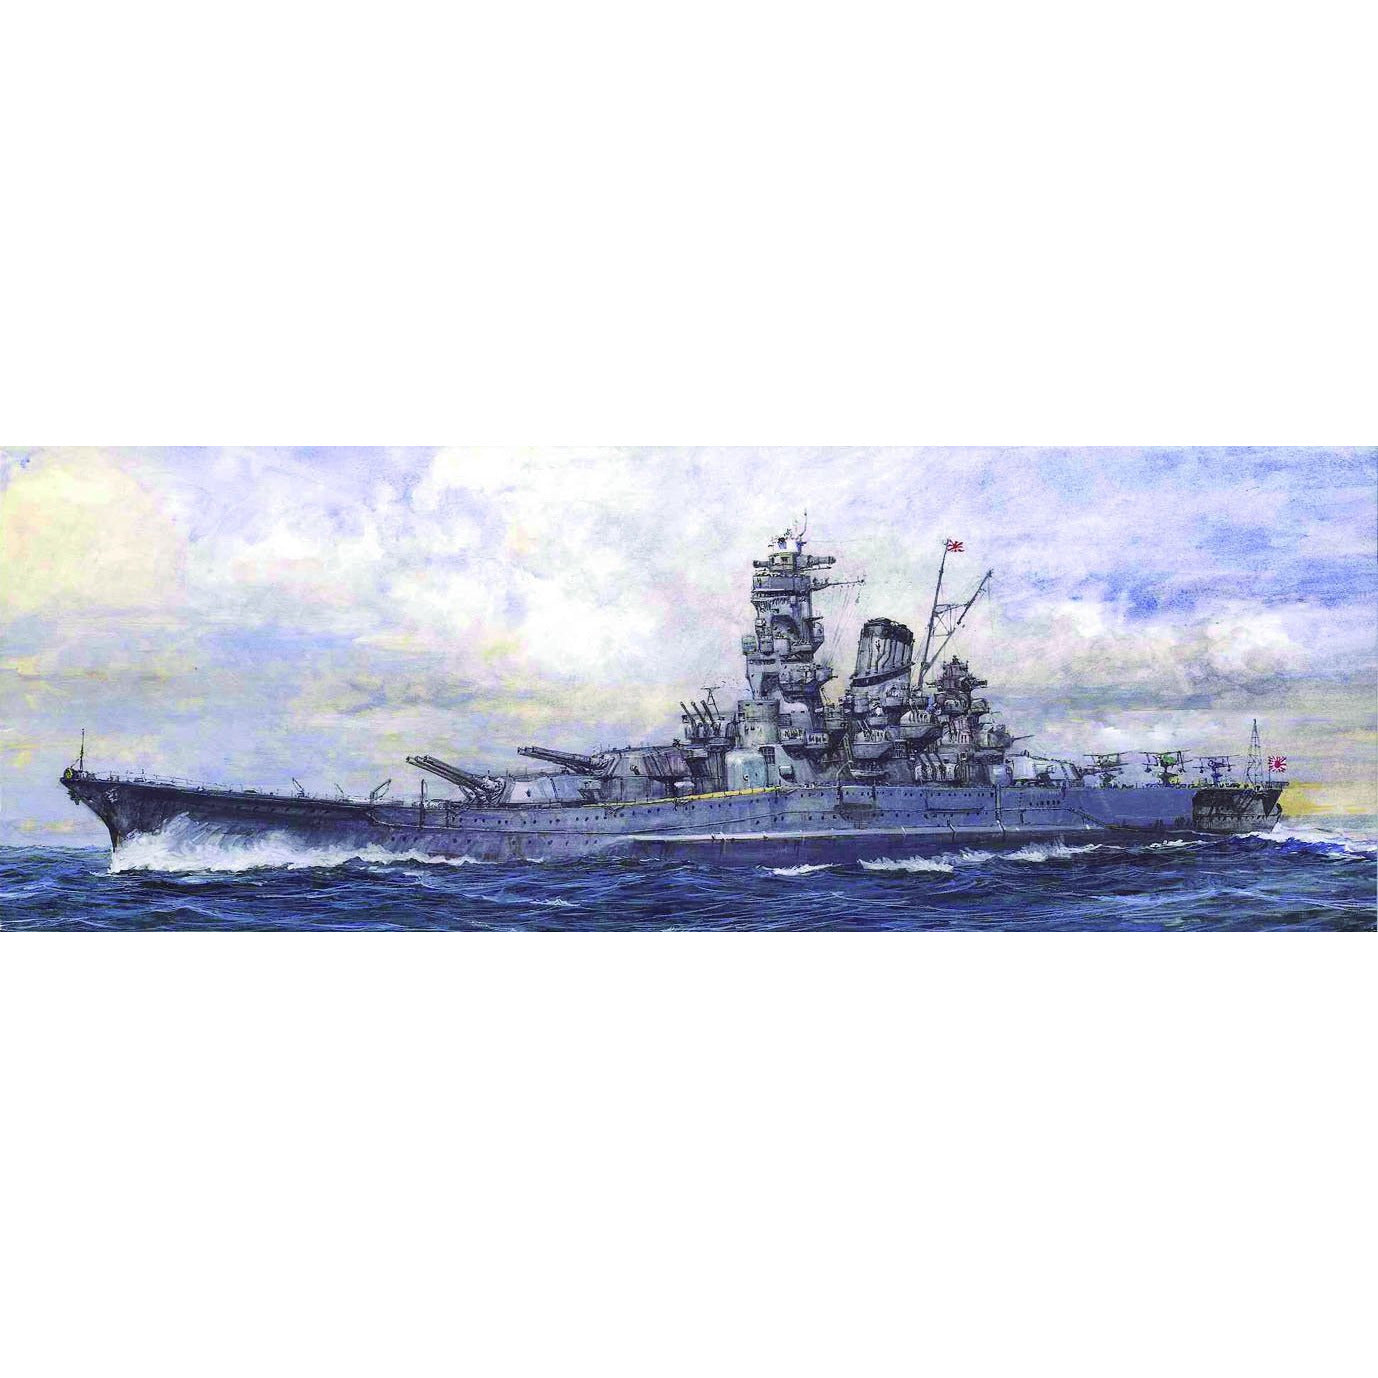 IJN Yamato Commission Type 1/700 Model Ship Kit #421315 by Fujimi